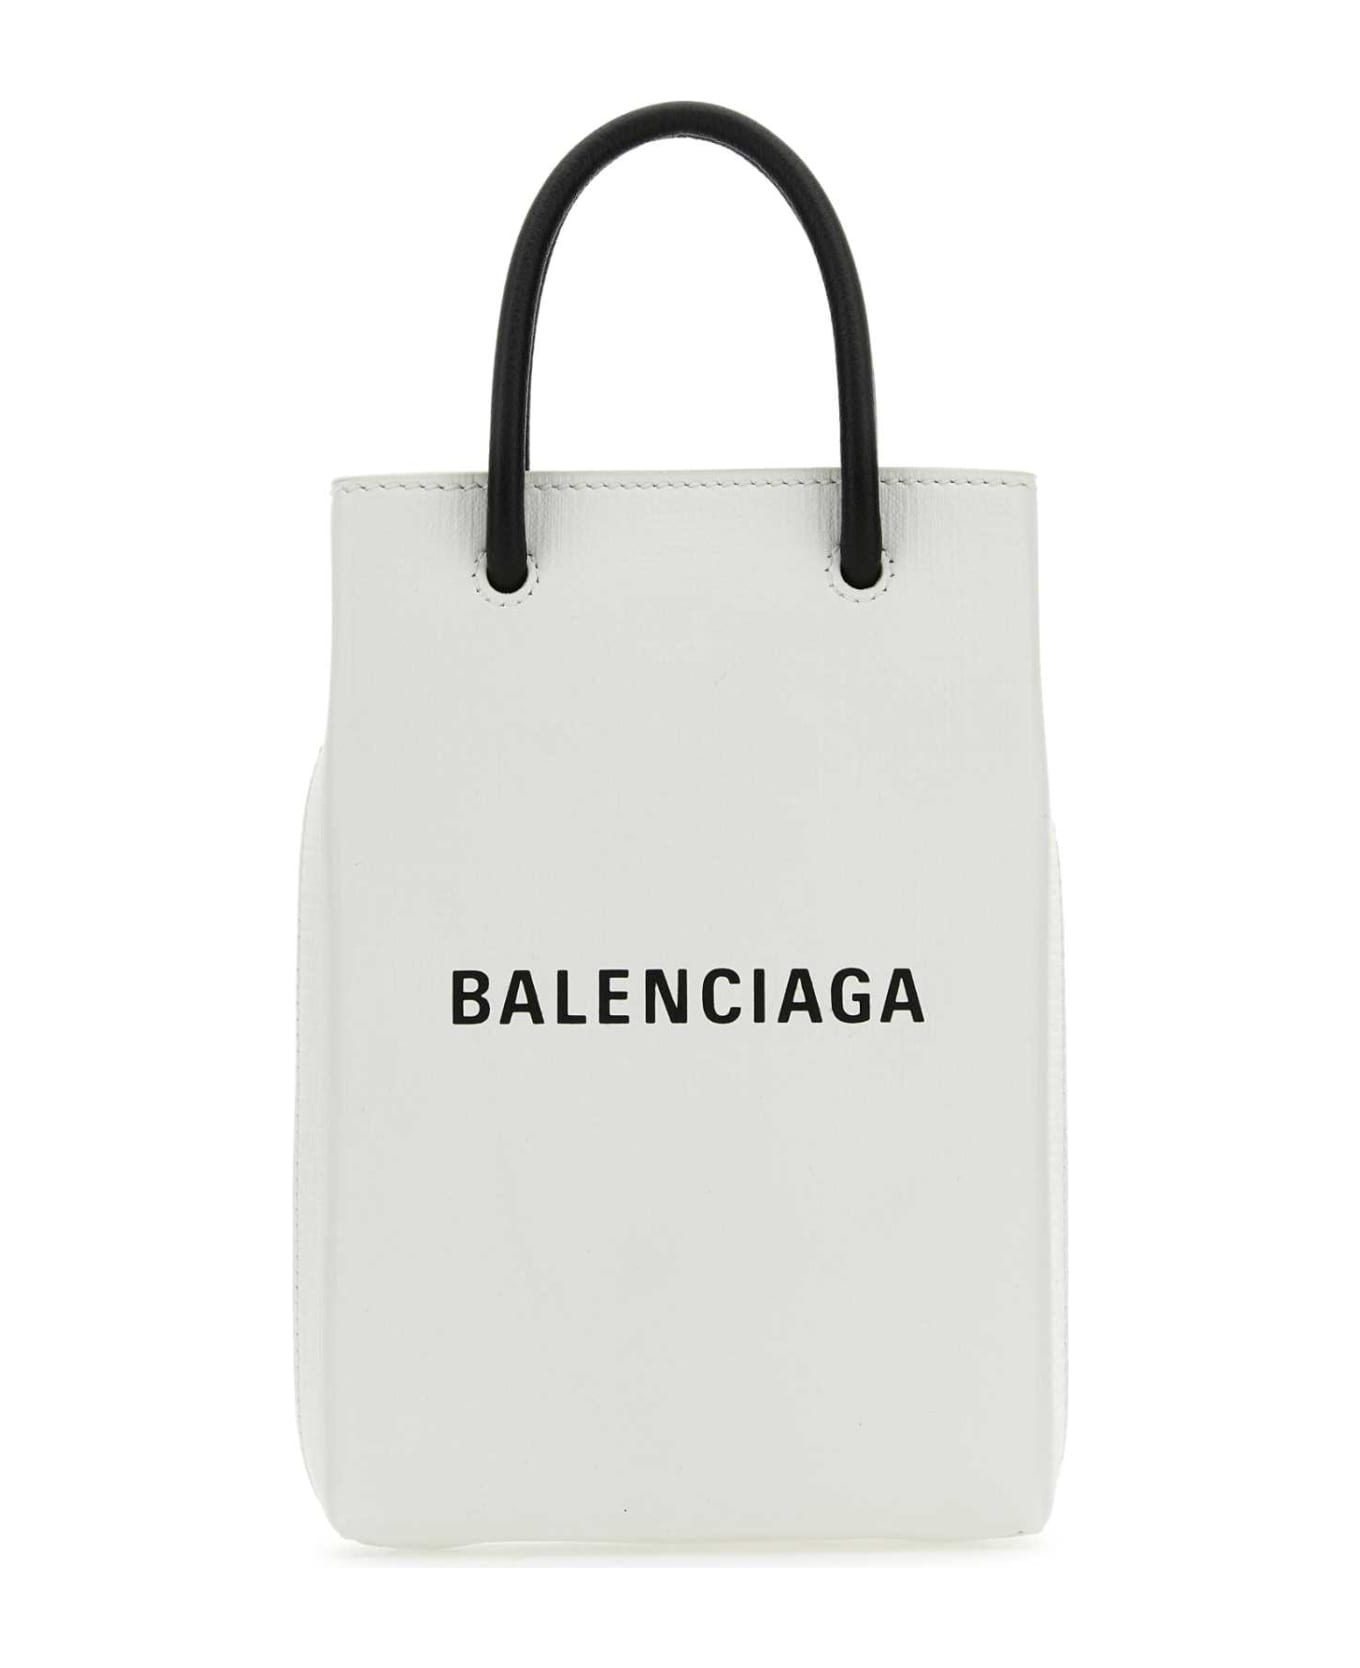 Balenciaga White Leather Phone Case - 9000